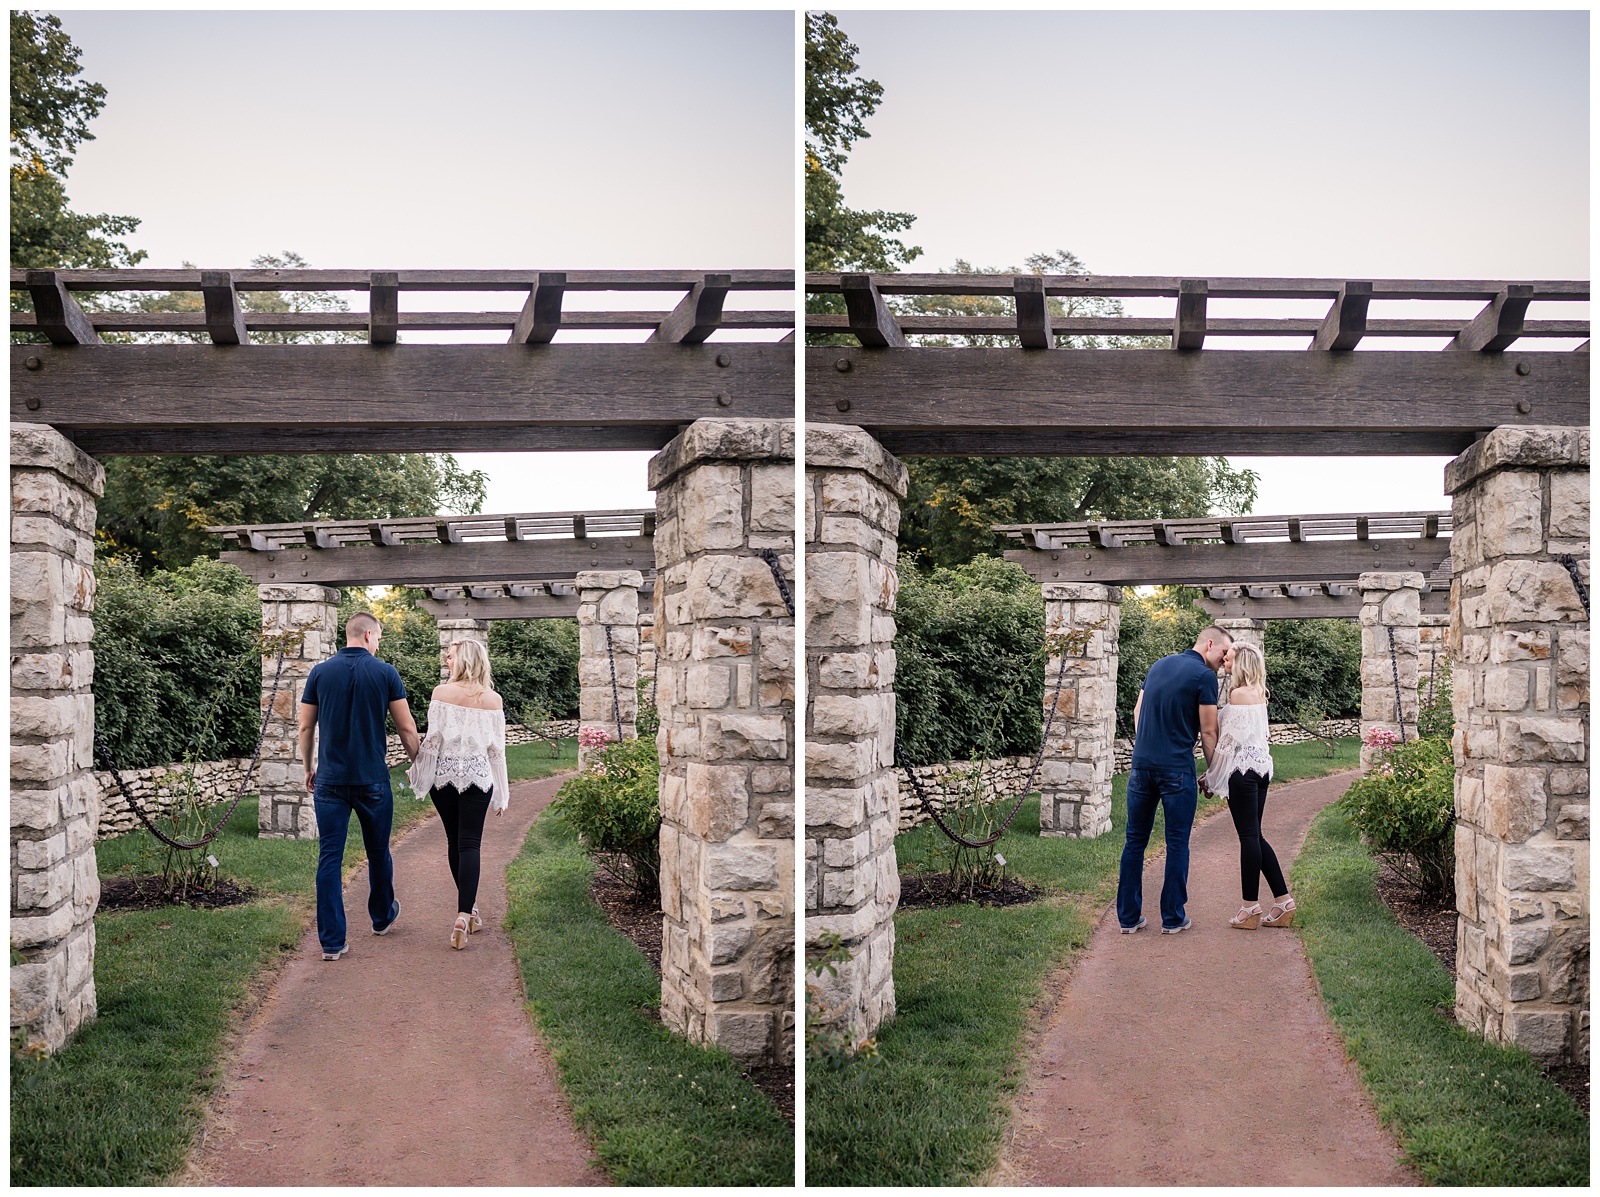 Engagement photography in Loose Park by Kansas City wedding photographers Wisdom-Watson Weddings.